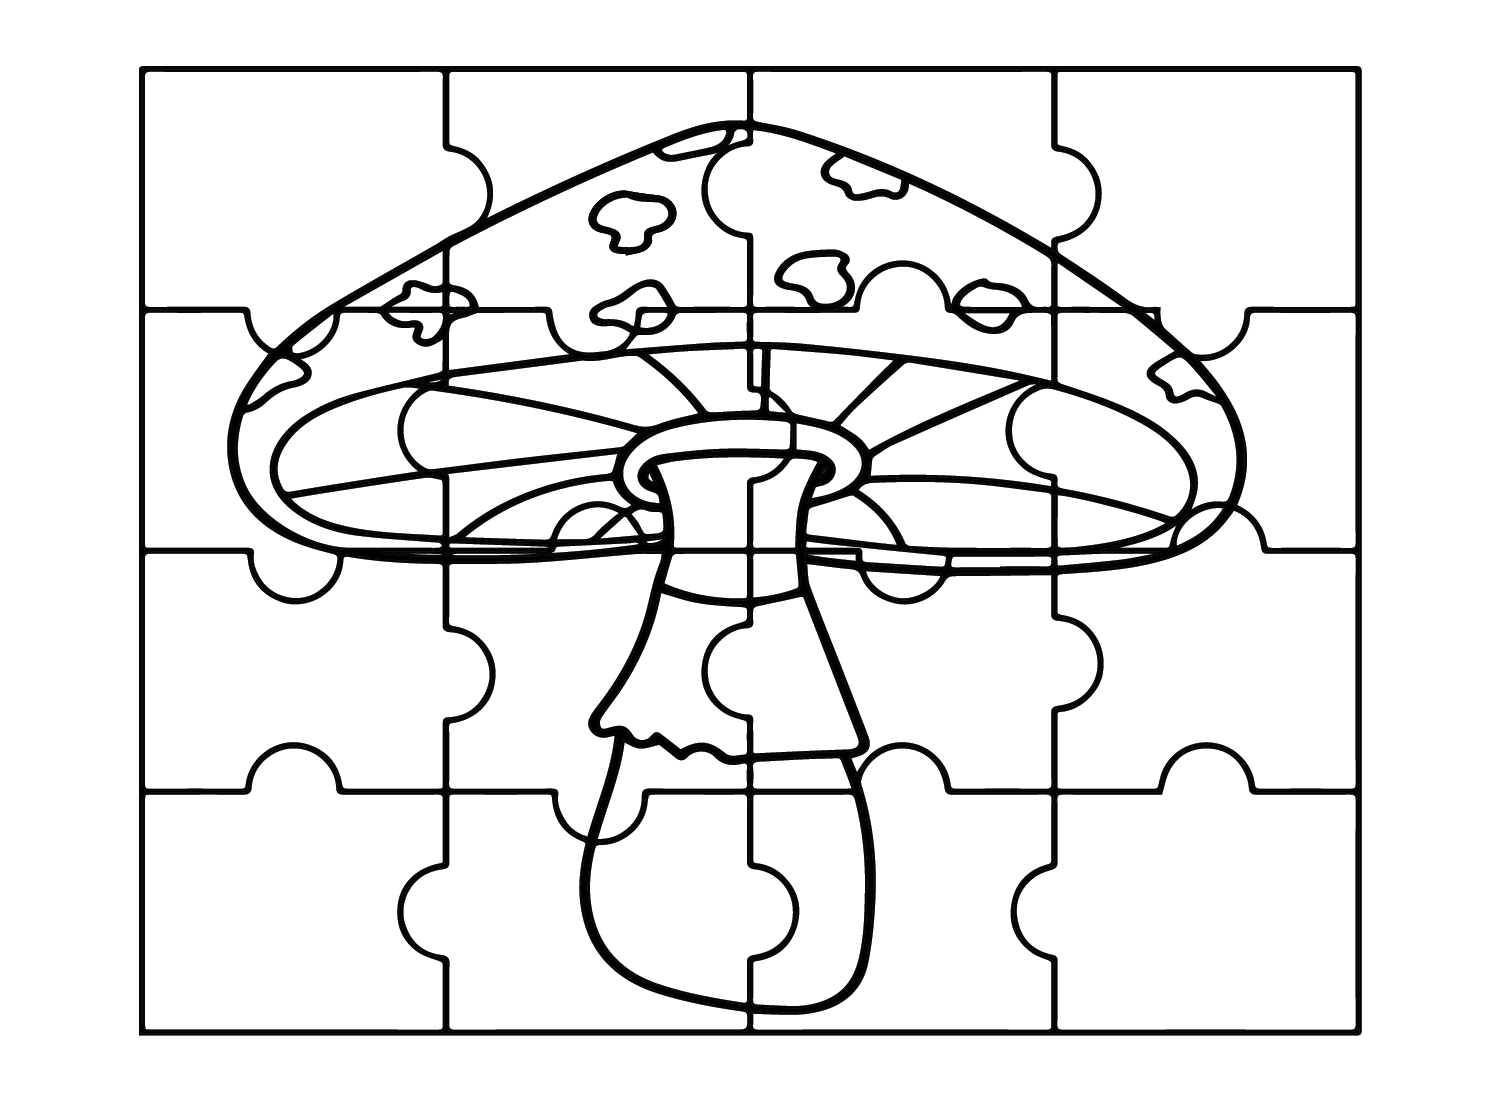 Quebra-cabeça de cogumelo from Jigsaw Puzzle